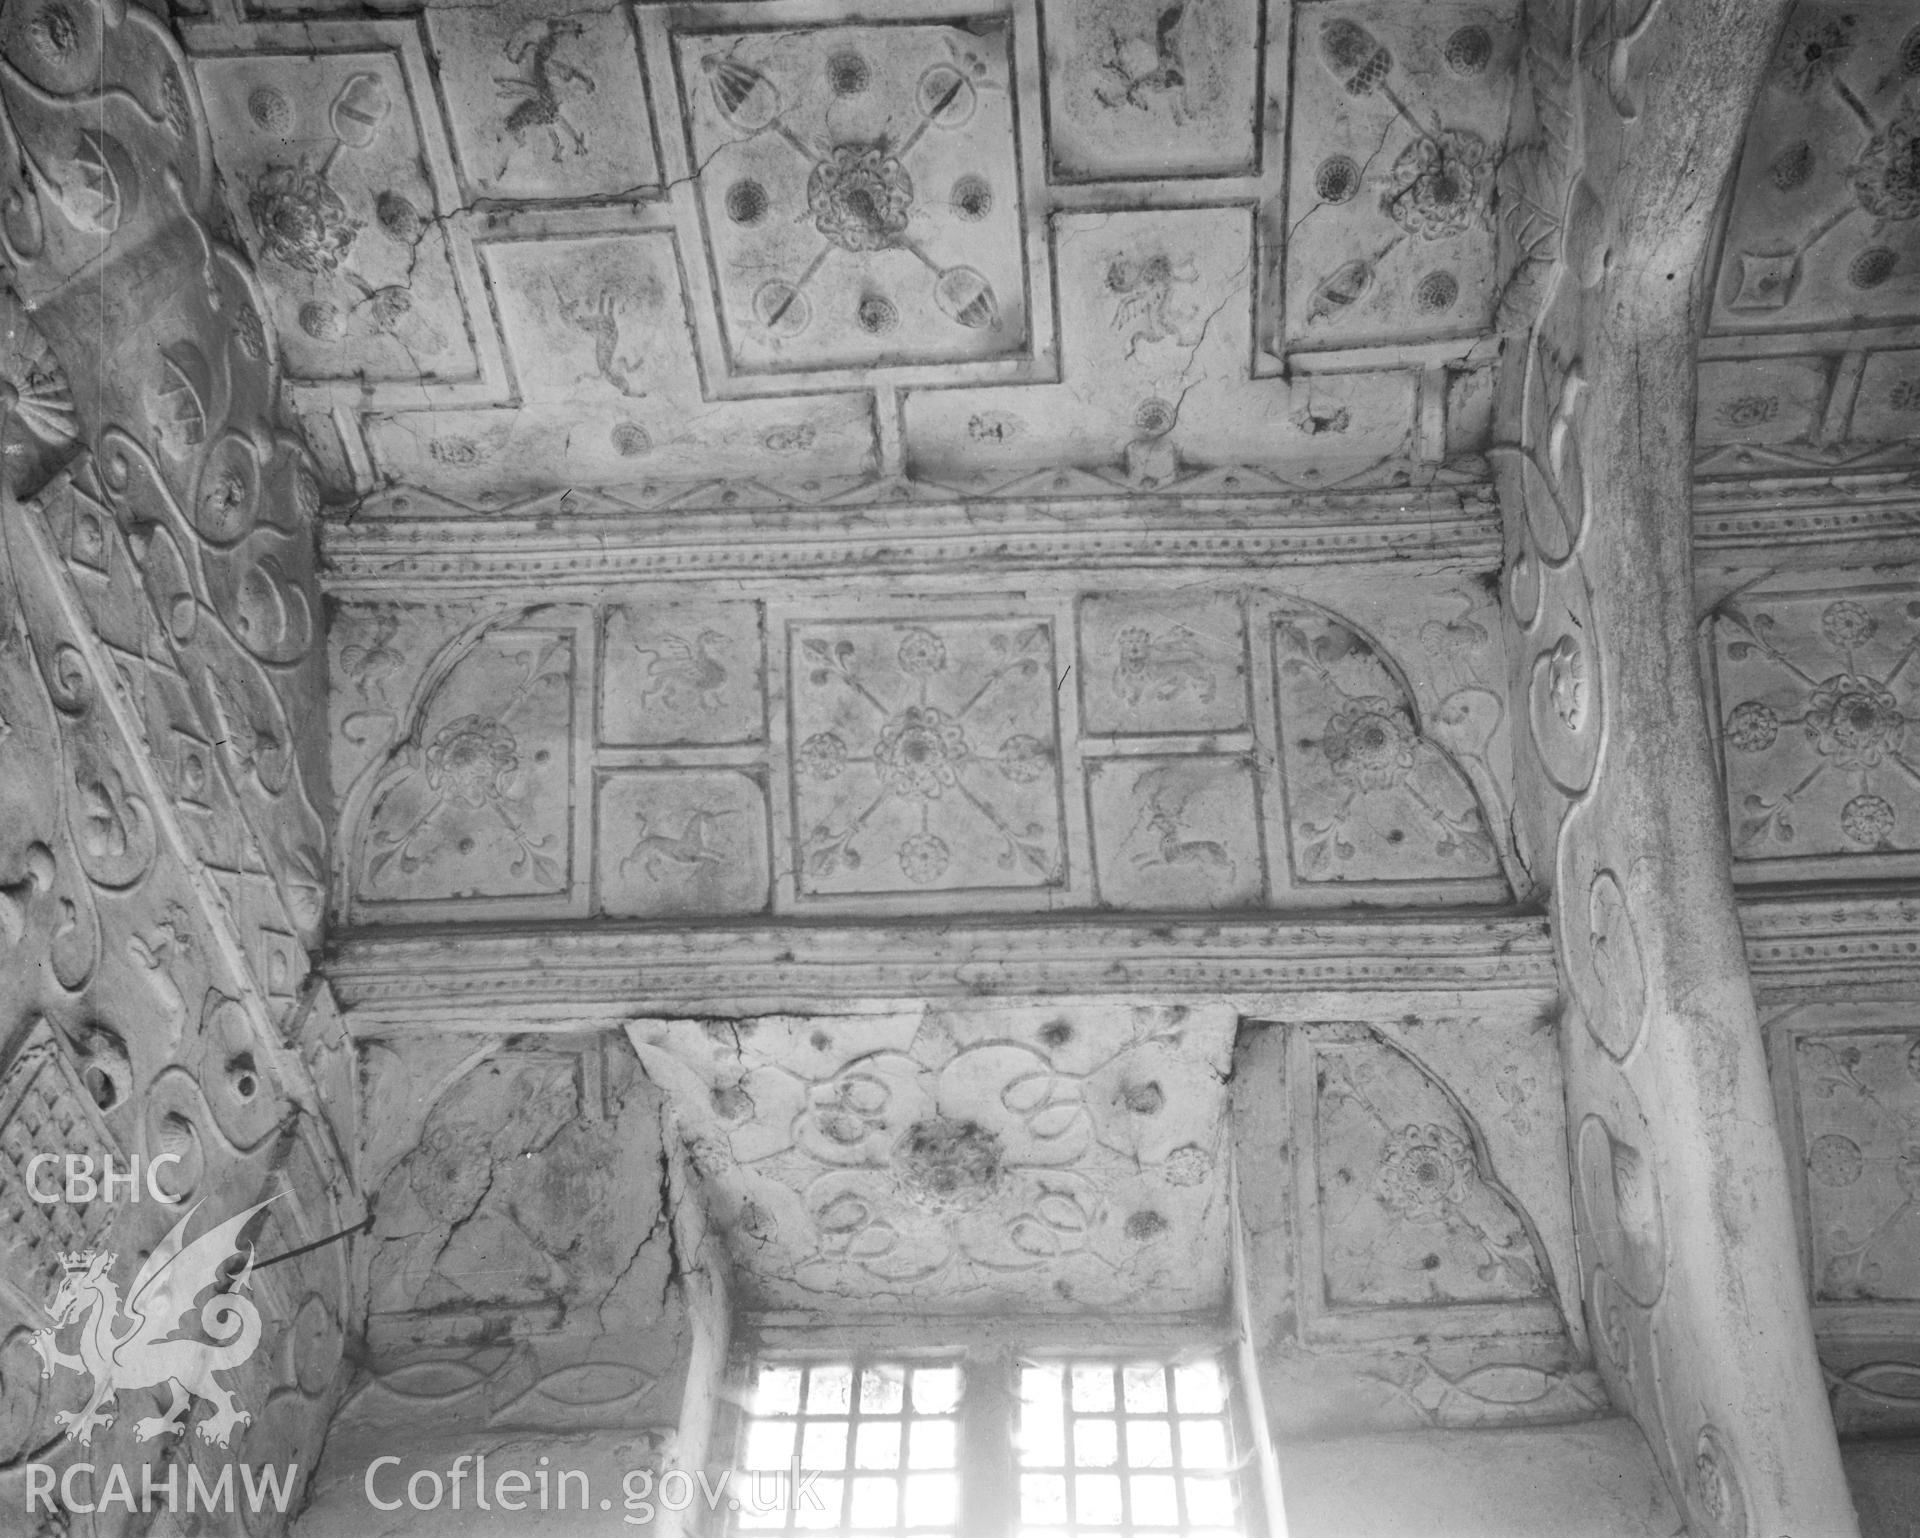 Interior view showing decorative plaster.